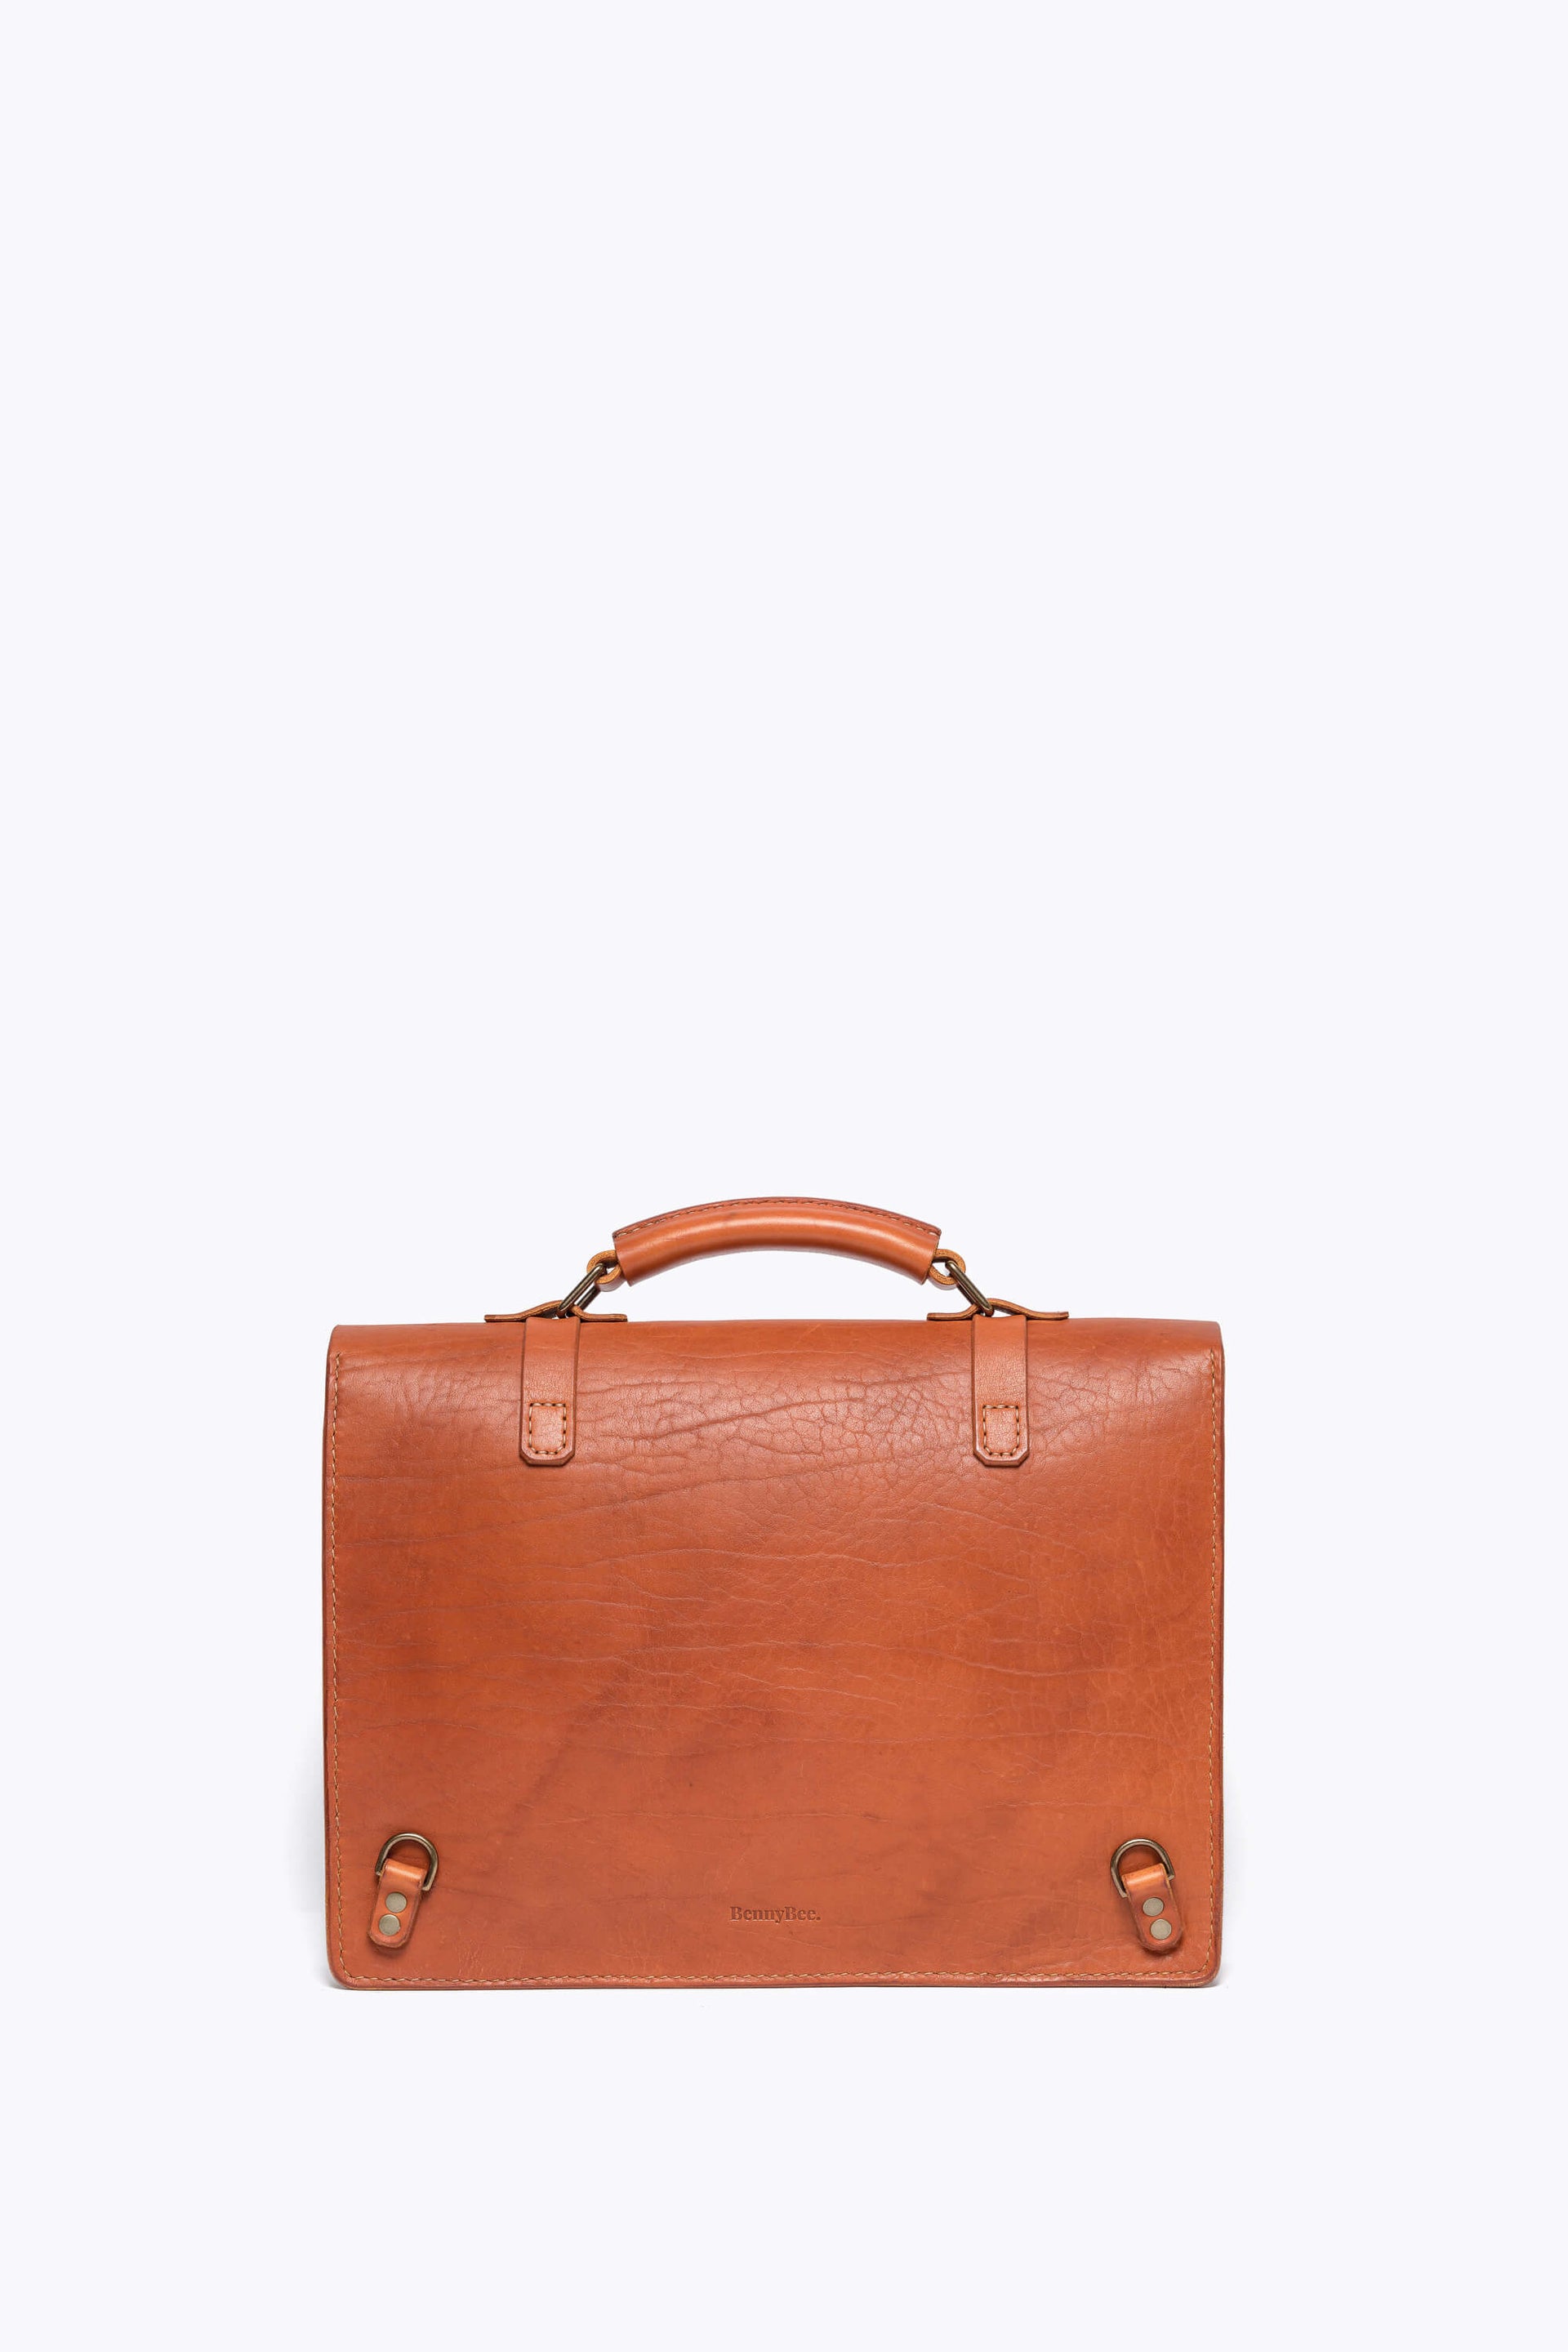 BennyBee Leather Messenger Bag 15" Cognac